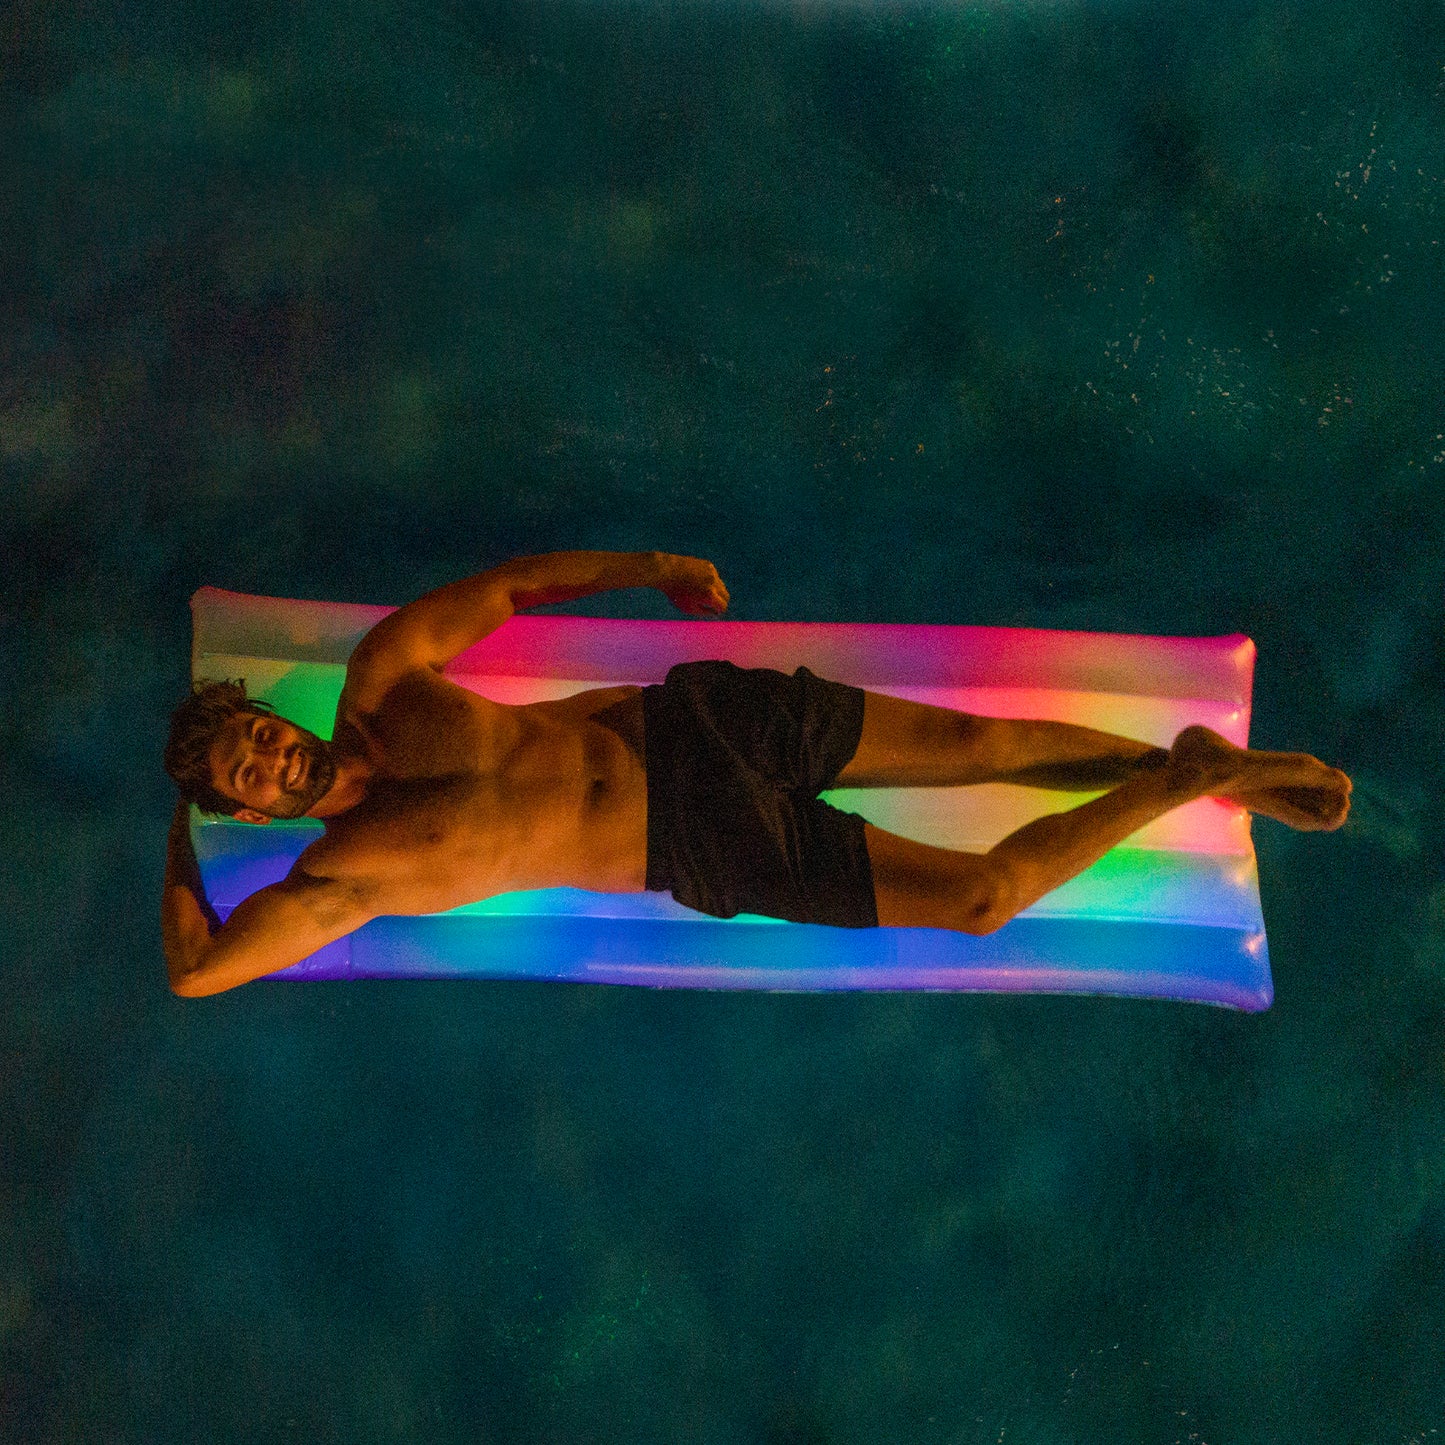 Classic Rainbow Illuminated LED Deluxe Pool Raft - 74 x 30"